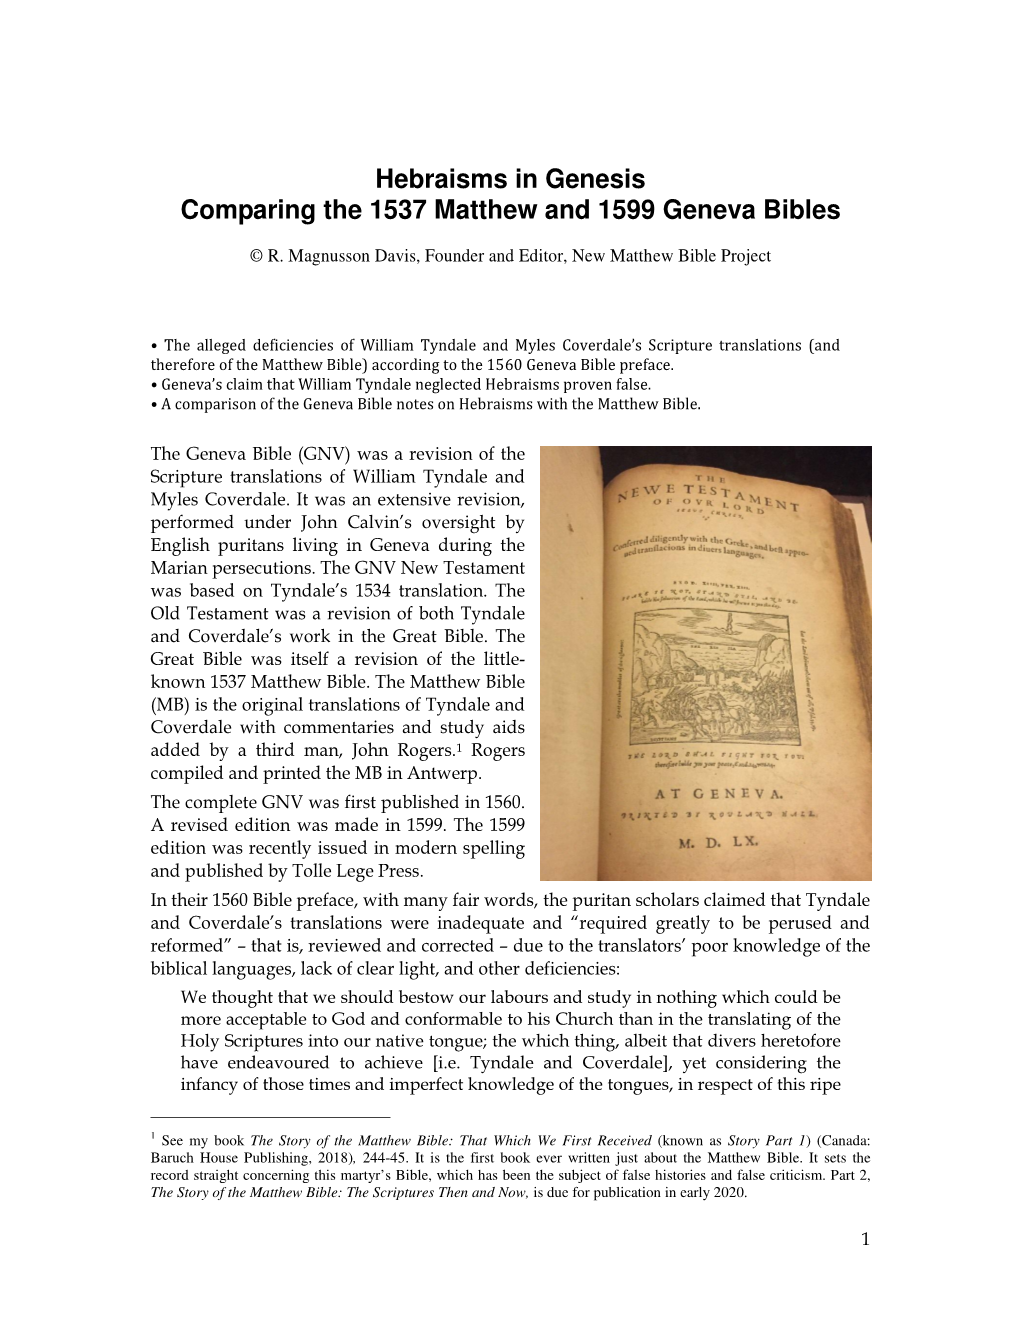 Hebraisms in Genesis Comparing the 1537 Matthew and 1599 Geneva Bibles